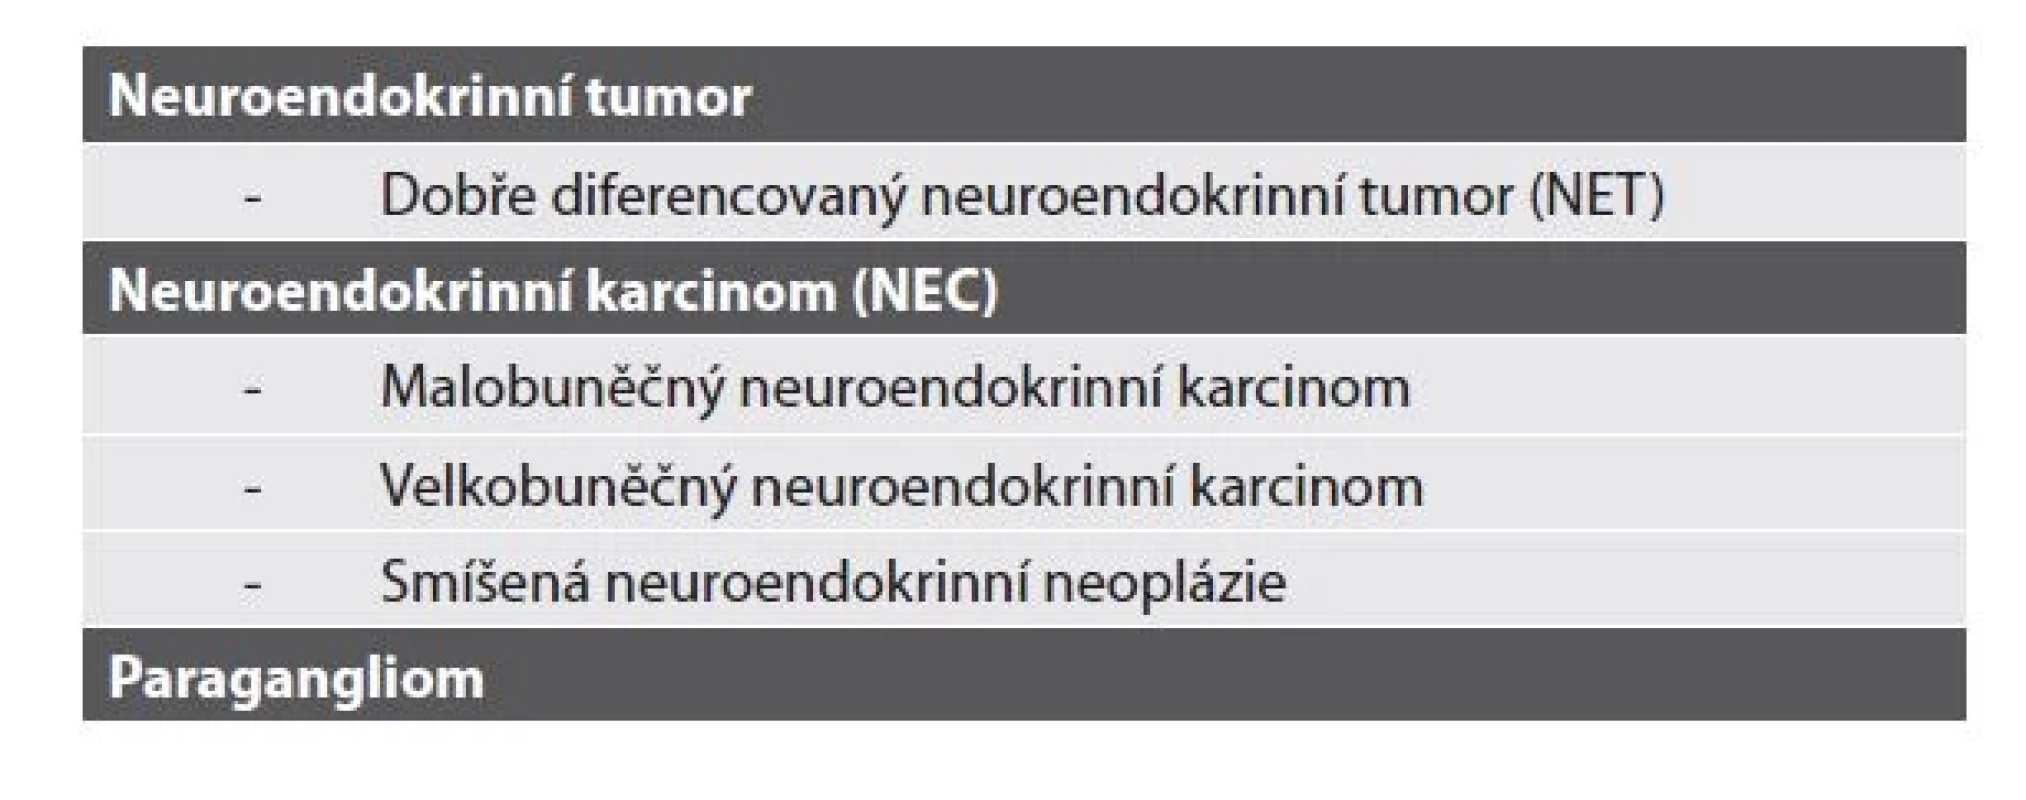 Klasifikace neuroendokrinních neoplázií dle WHO 2022 (2).